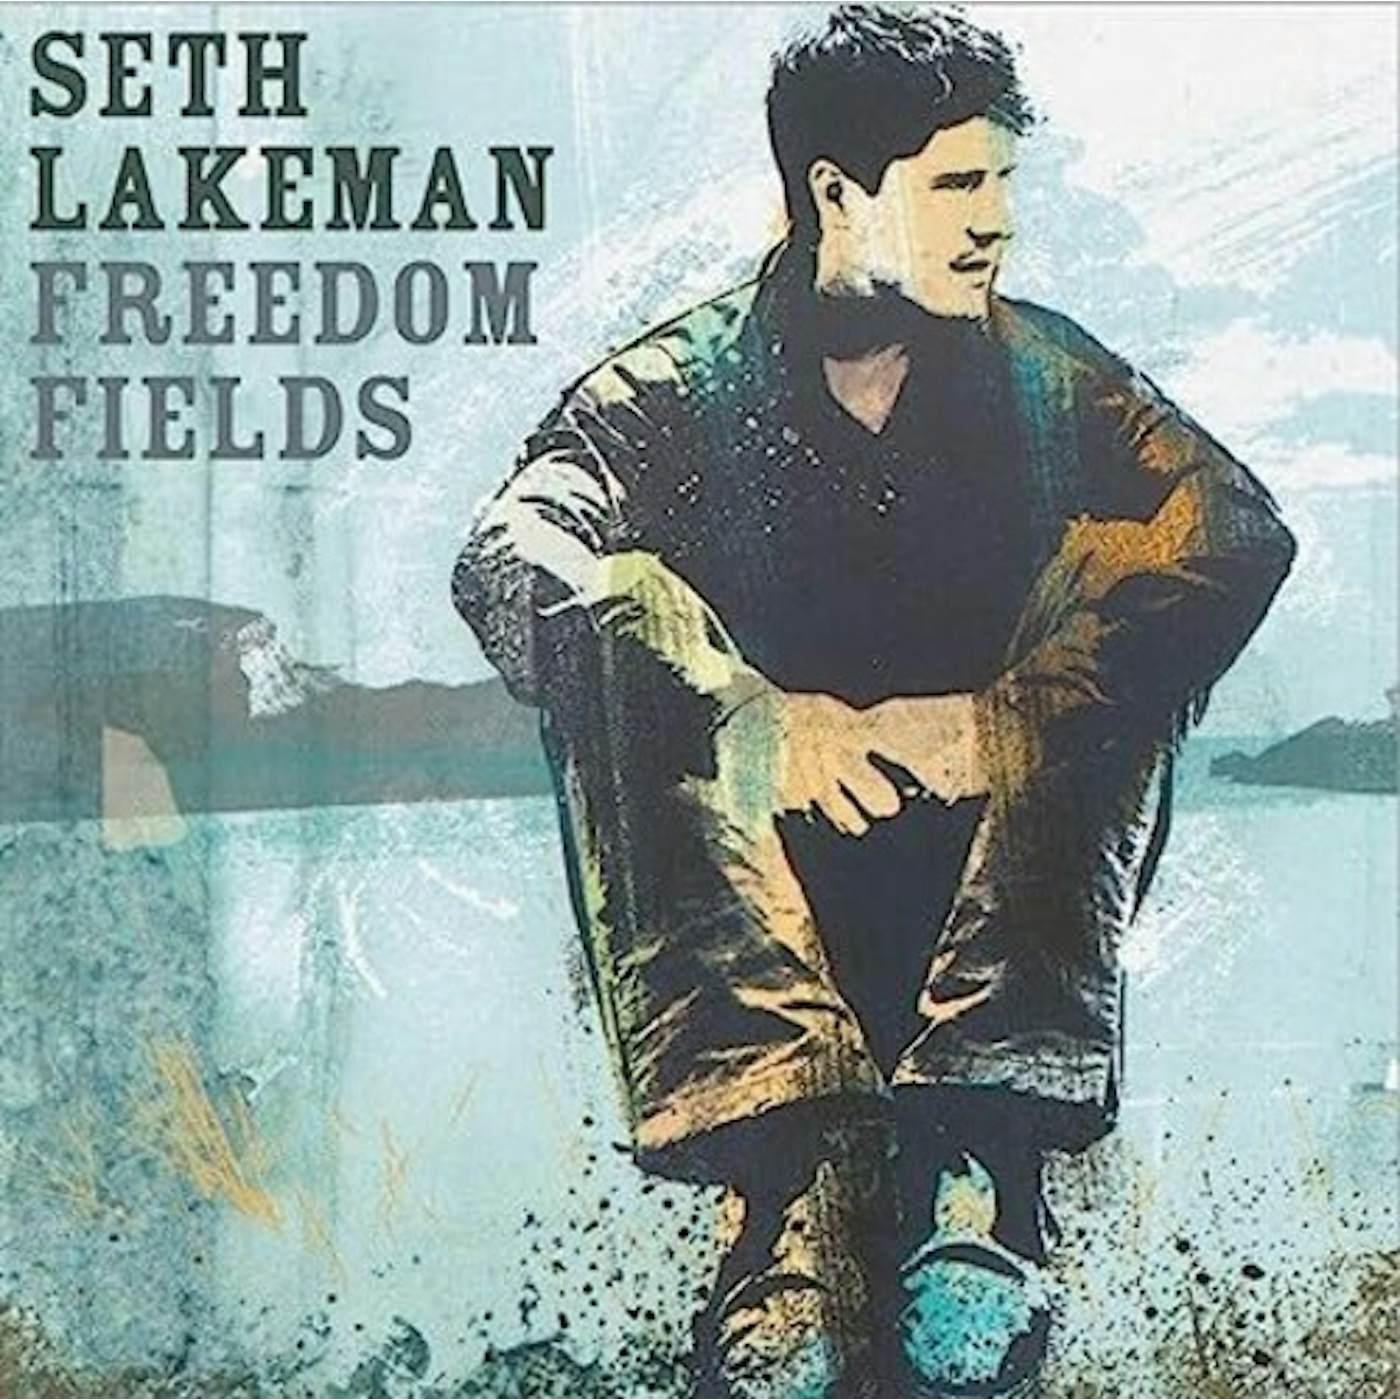 Seth Lakeman FREEDOM FIELDS: ANNIVERSARY EDITION CD